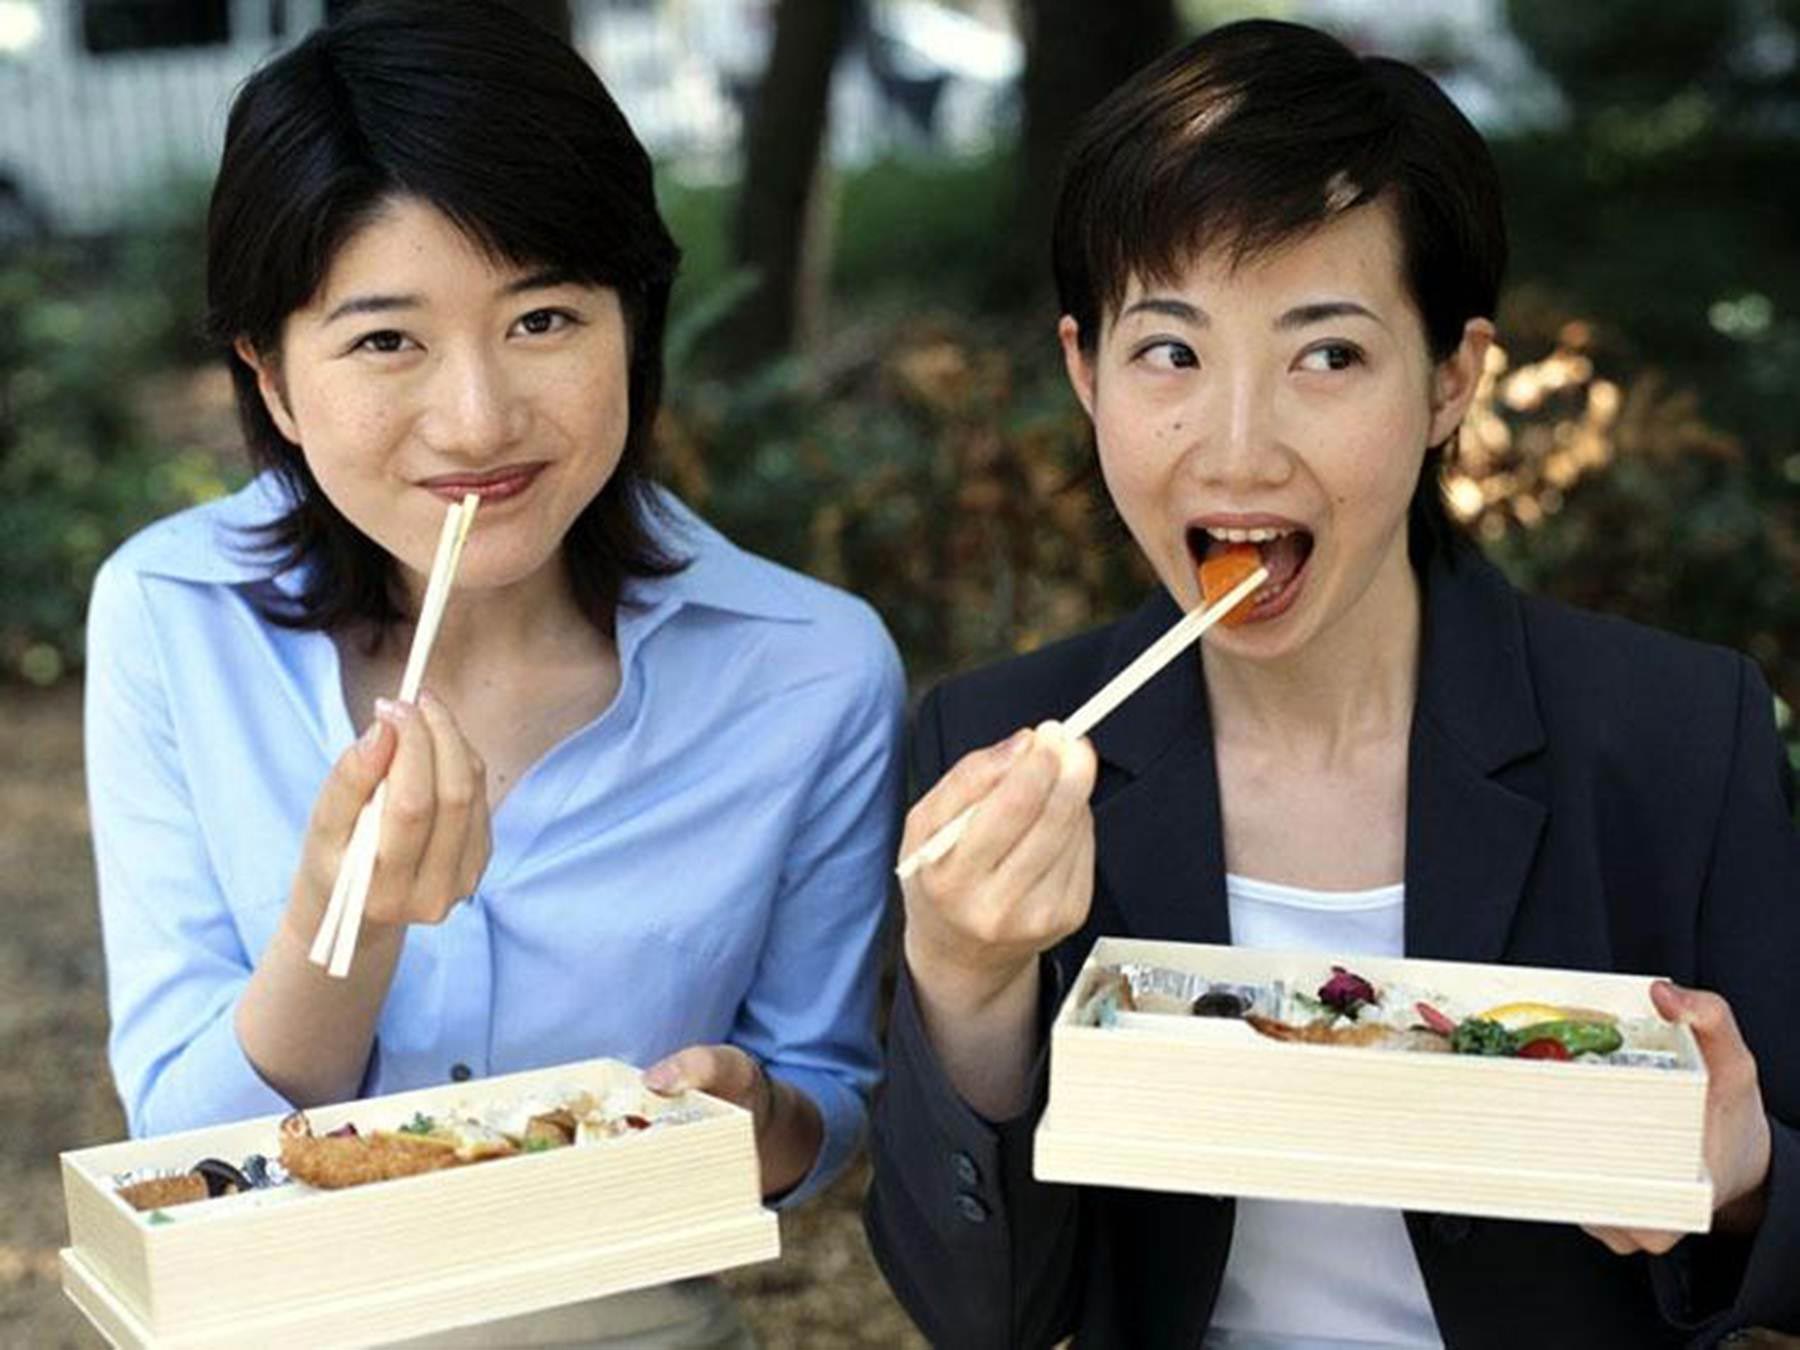 О разнице вкусов. Корейцы едят палочками. Японцы едят палочками. Японцы обедают. Японцы едят суши.